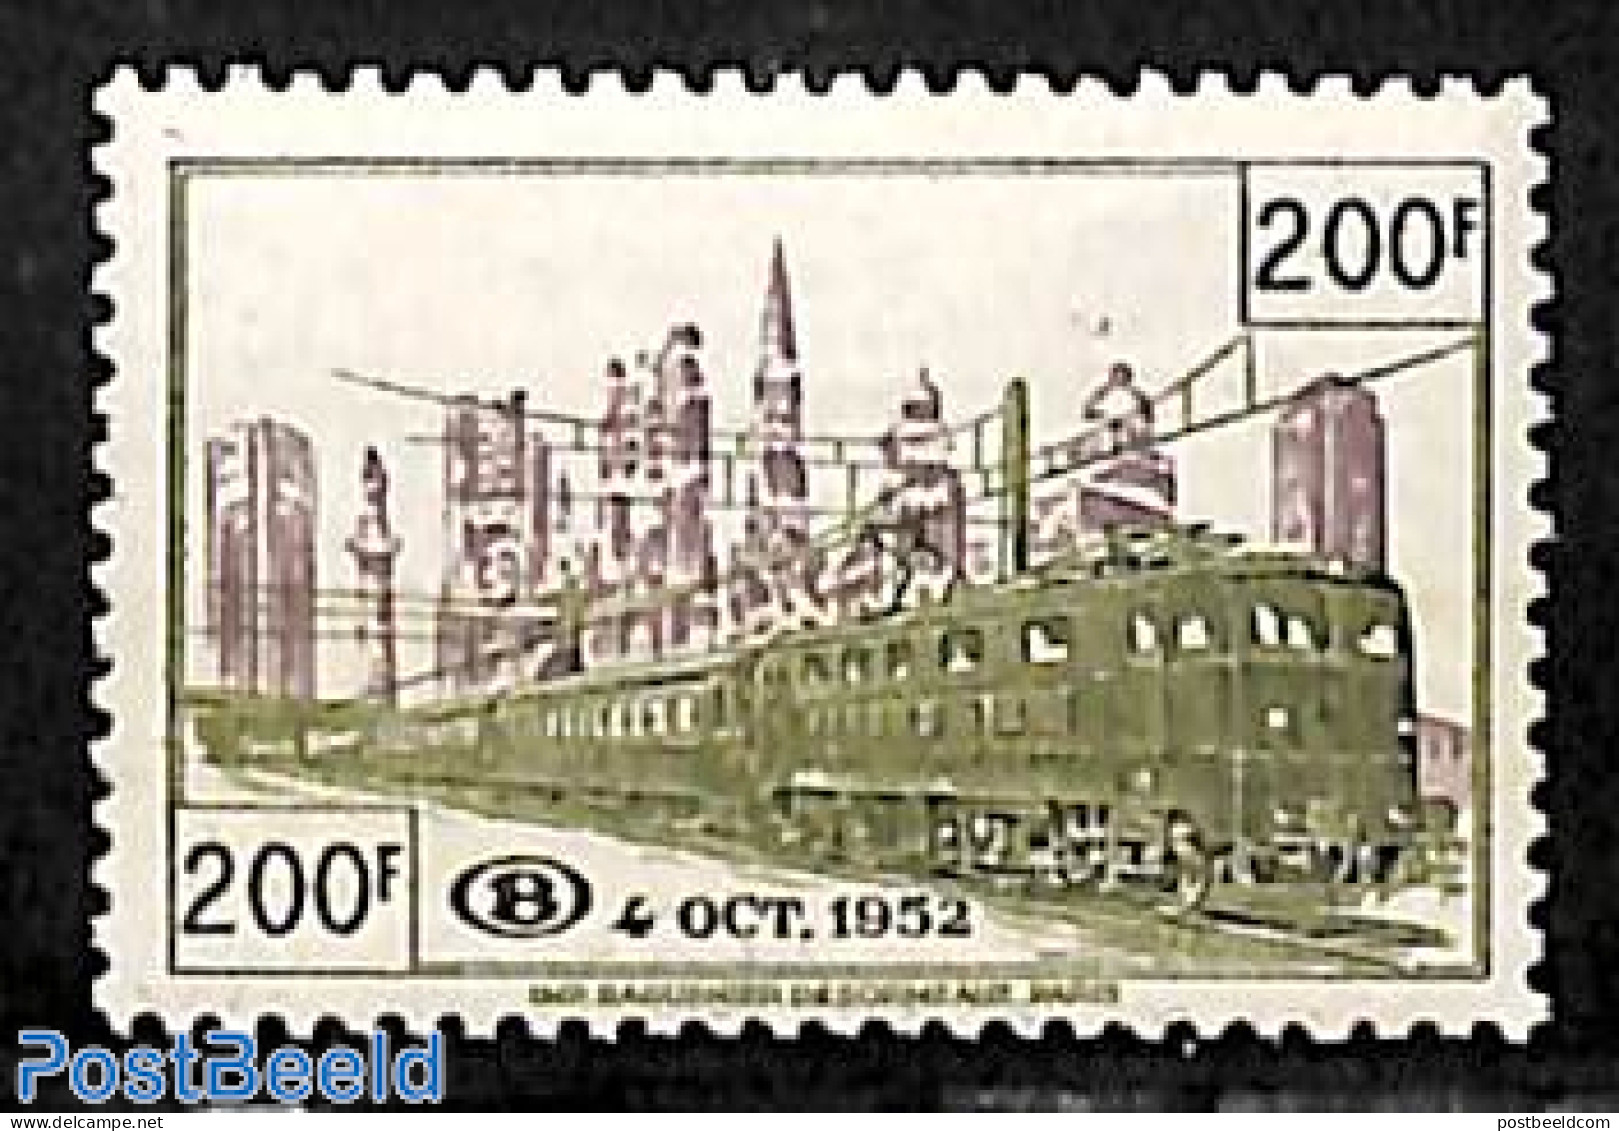 Belgium 1953 Railway Stamp, North South Line 1v, Mint NH, Transport - Railways - Unused Stamps